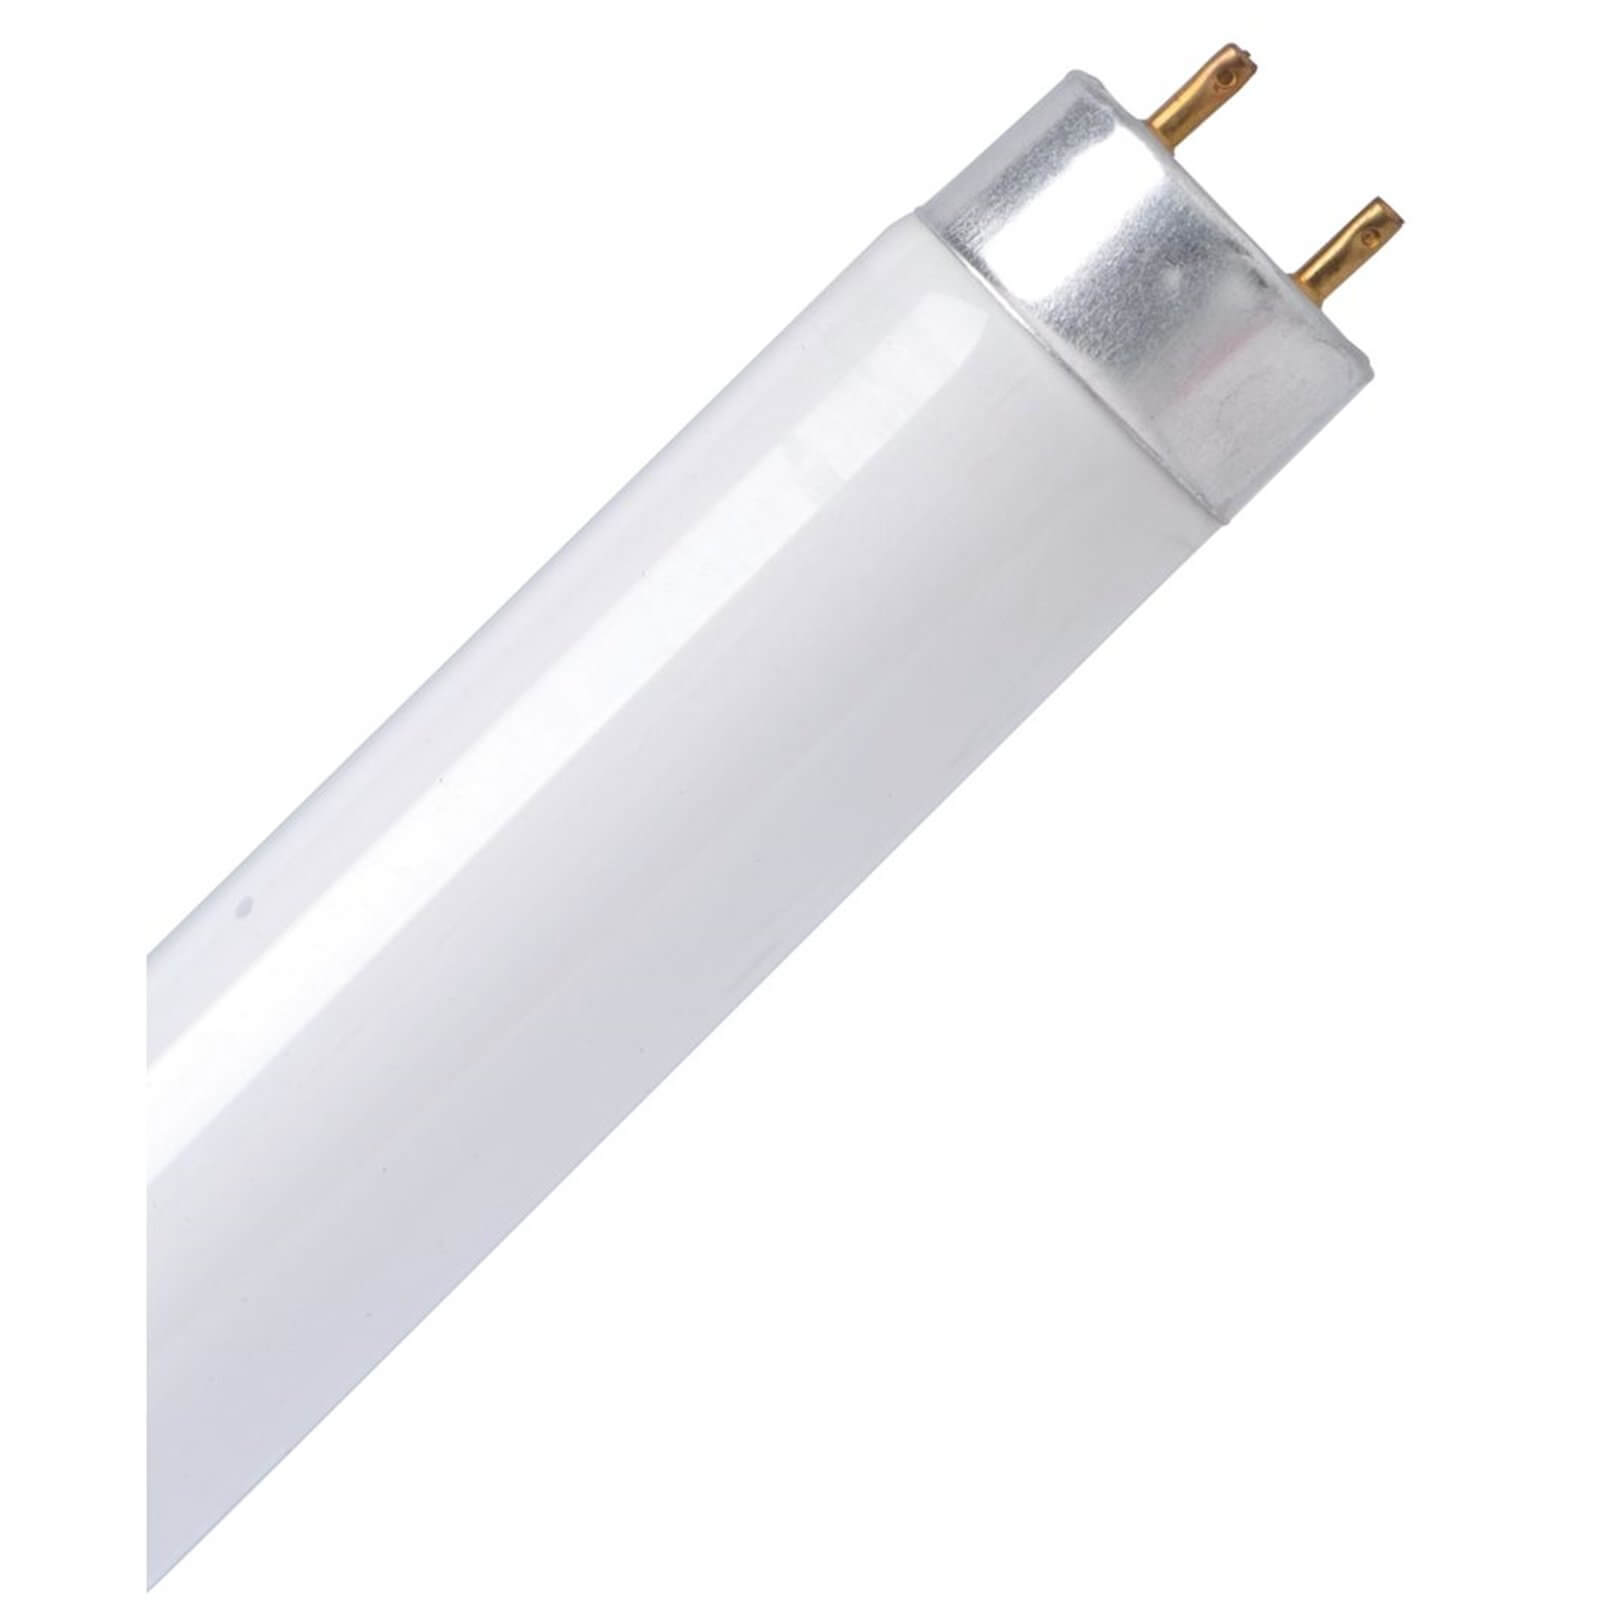 Photo of Energy Saver -cfl- Tube Cool White 0.3 8w Light Bulb